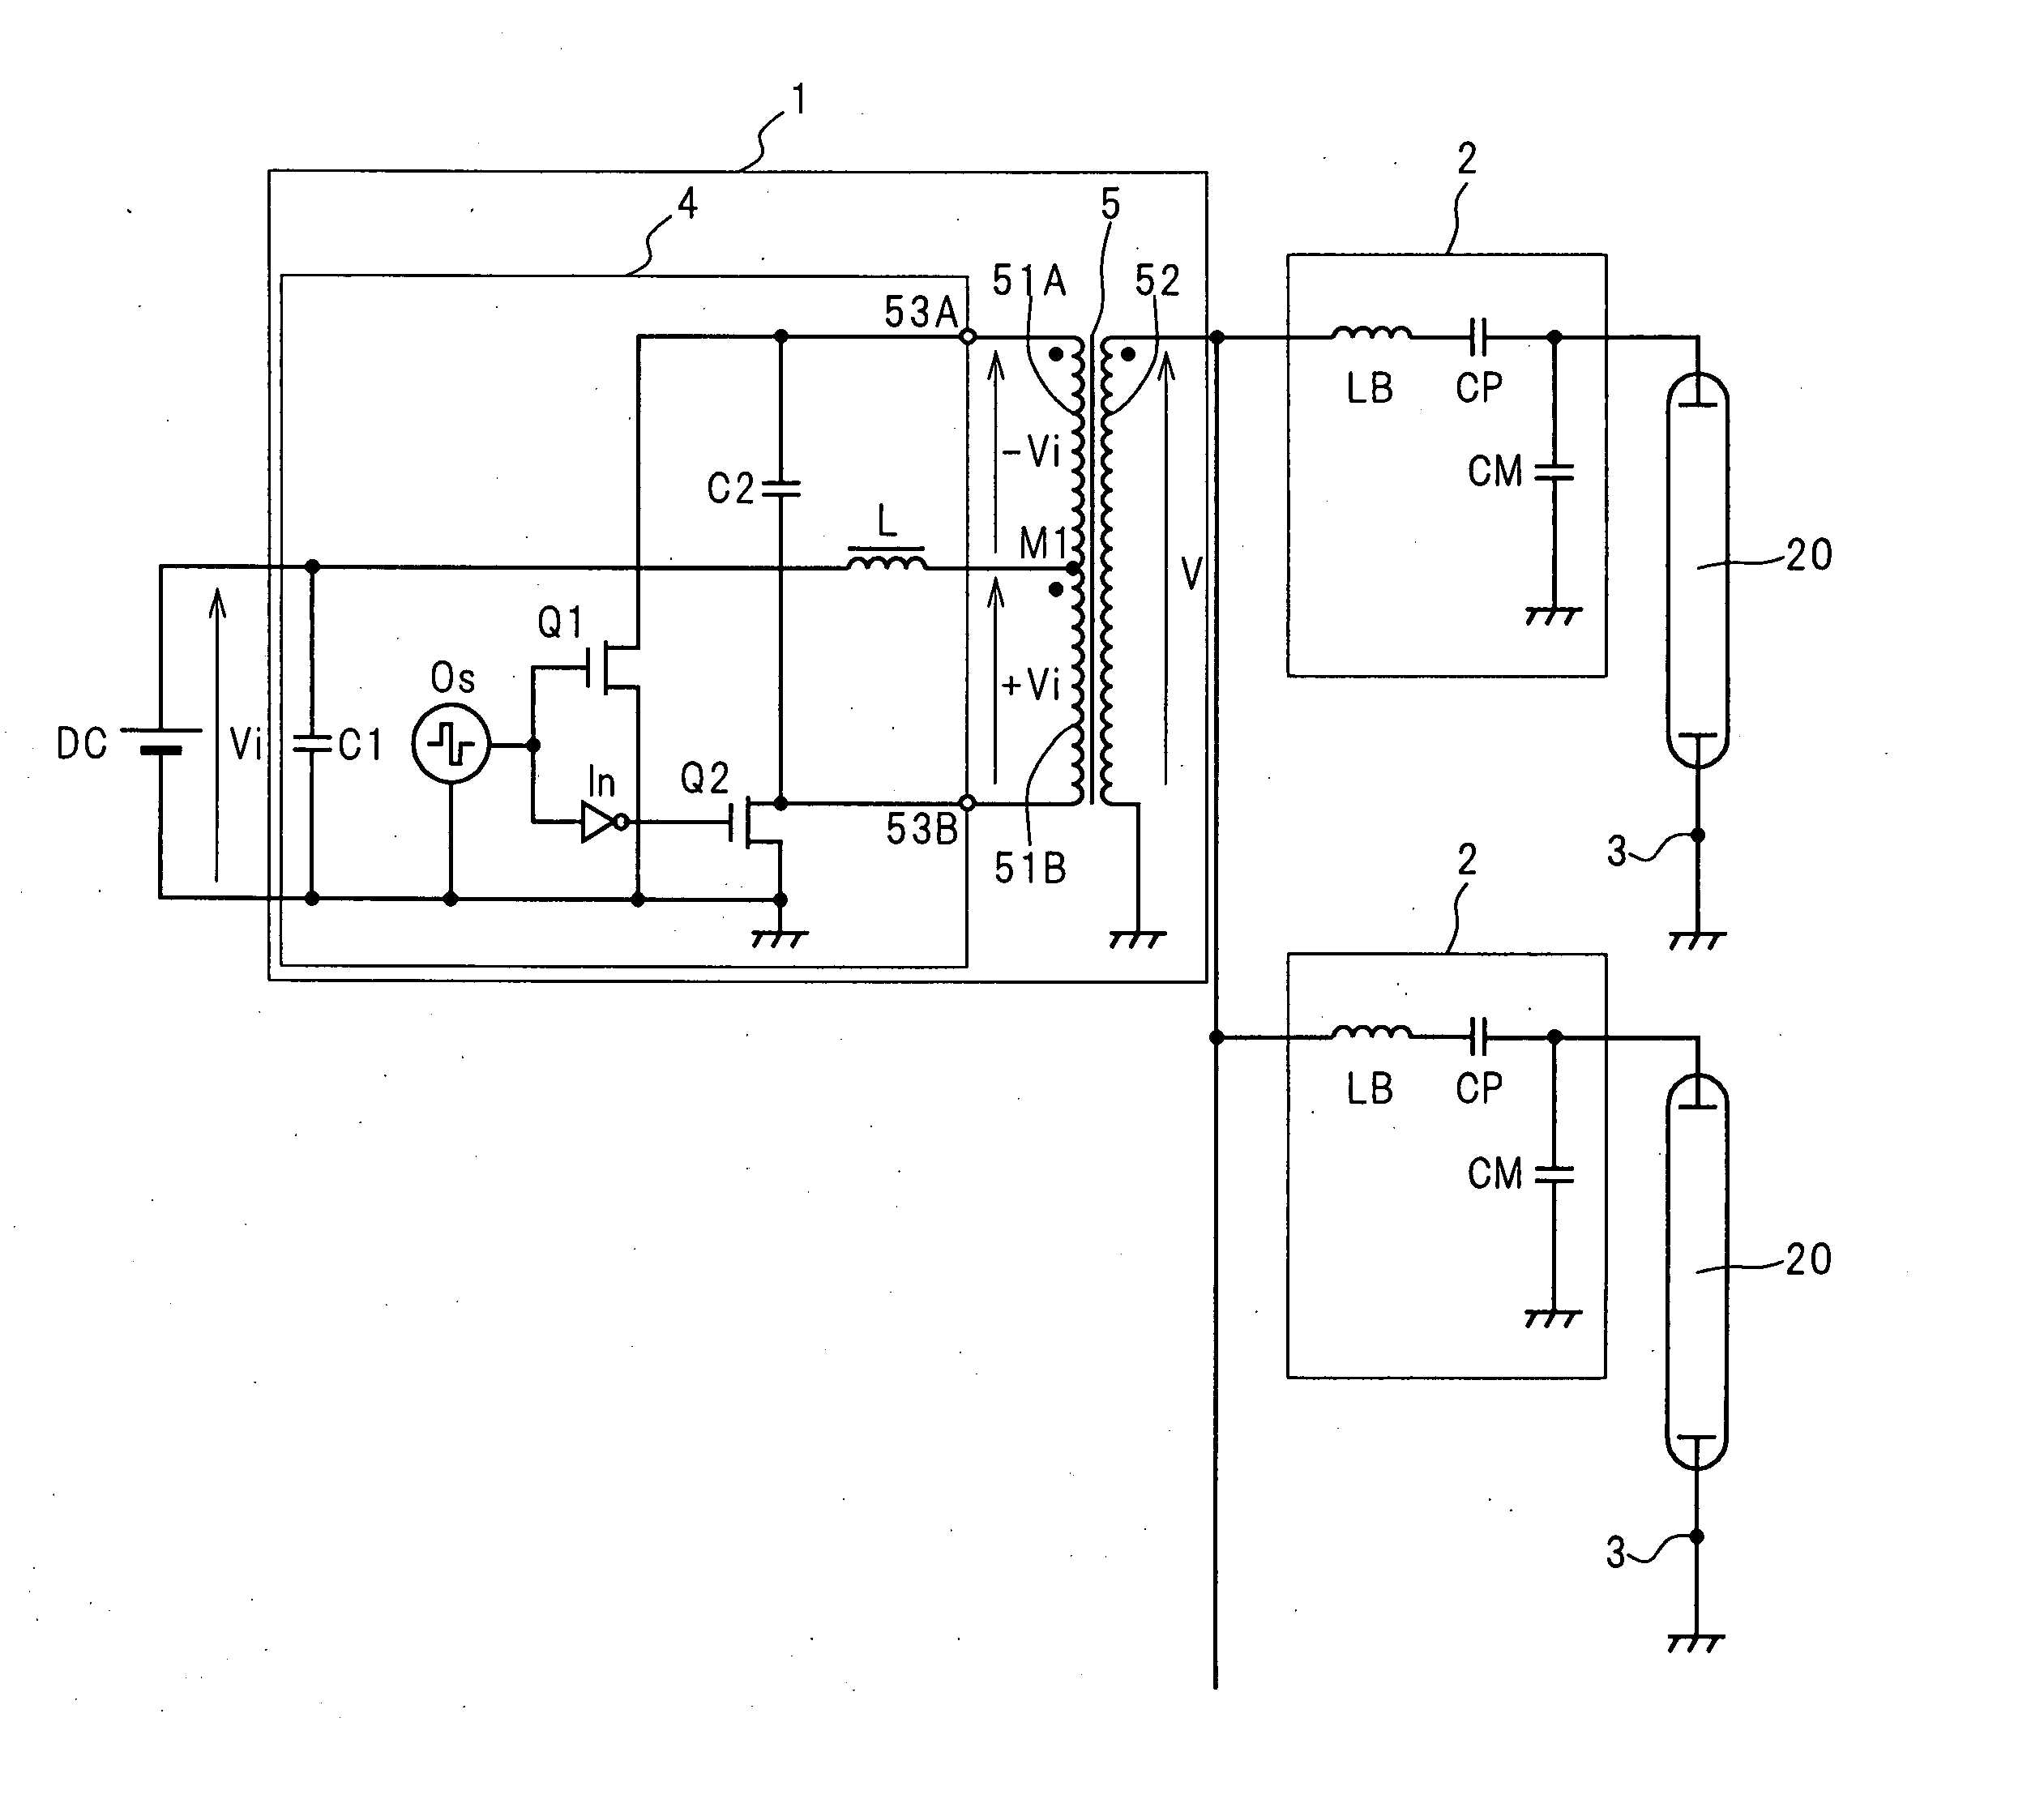 Cold cathode fluorescent lamp driver circuit